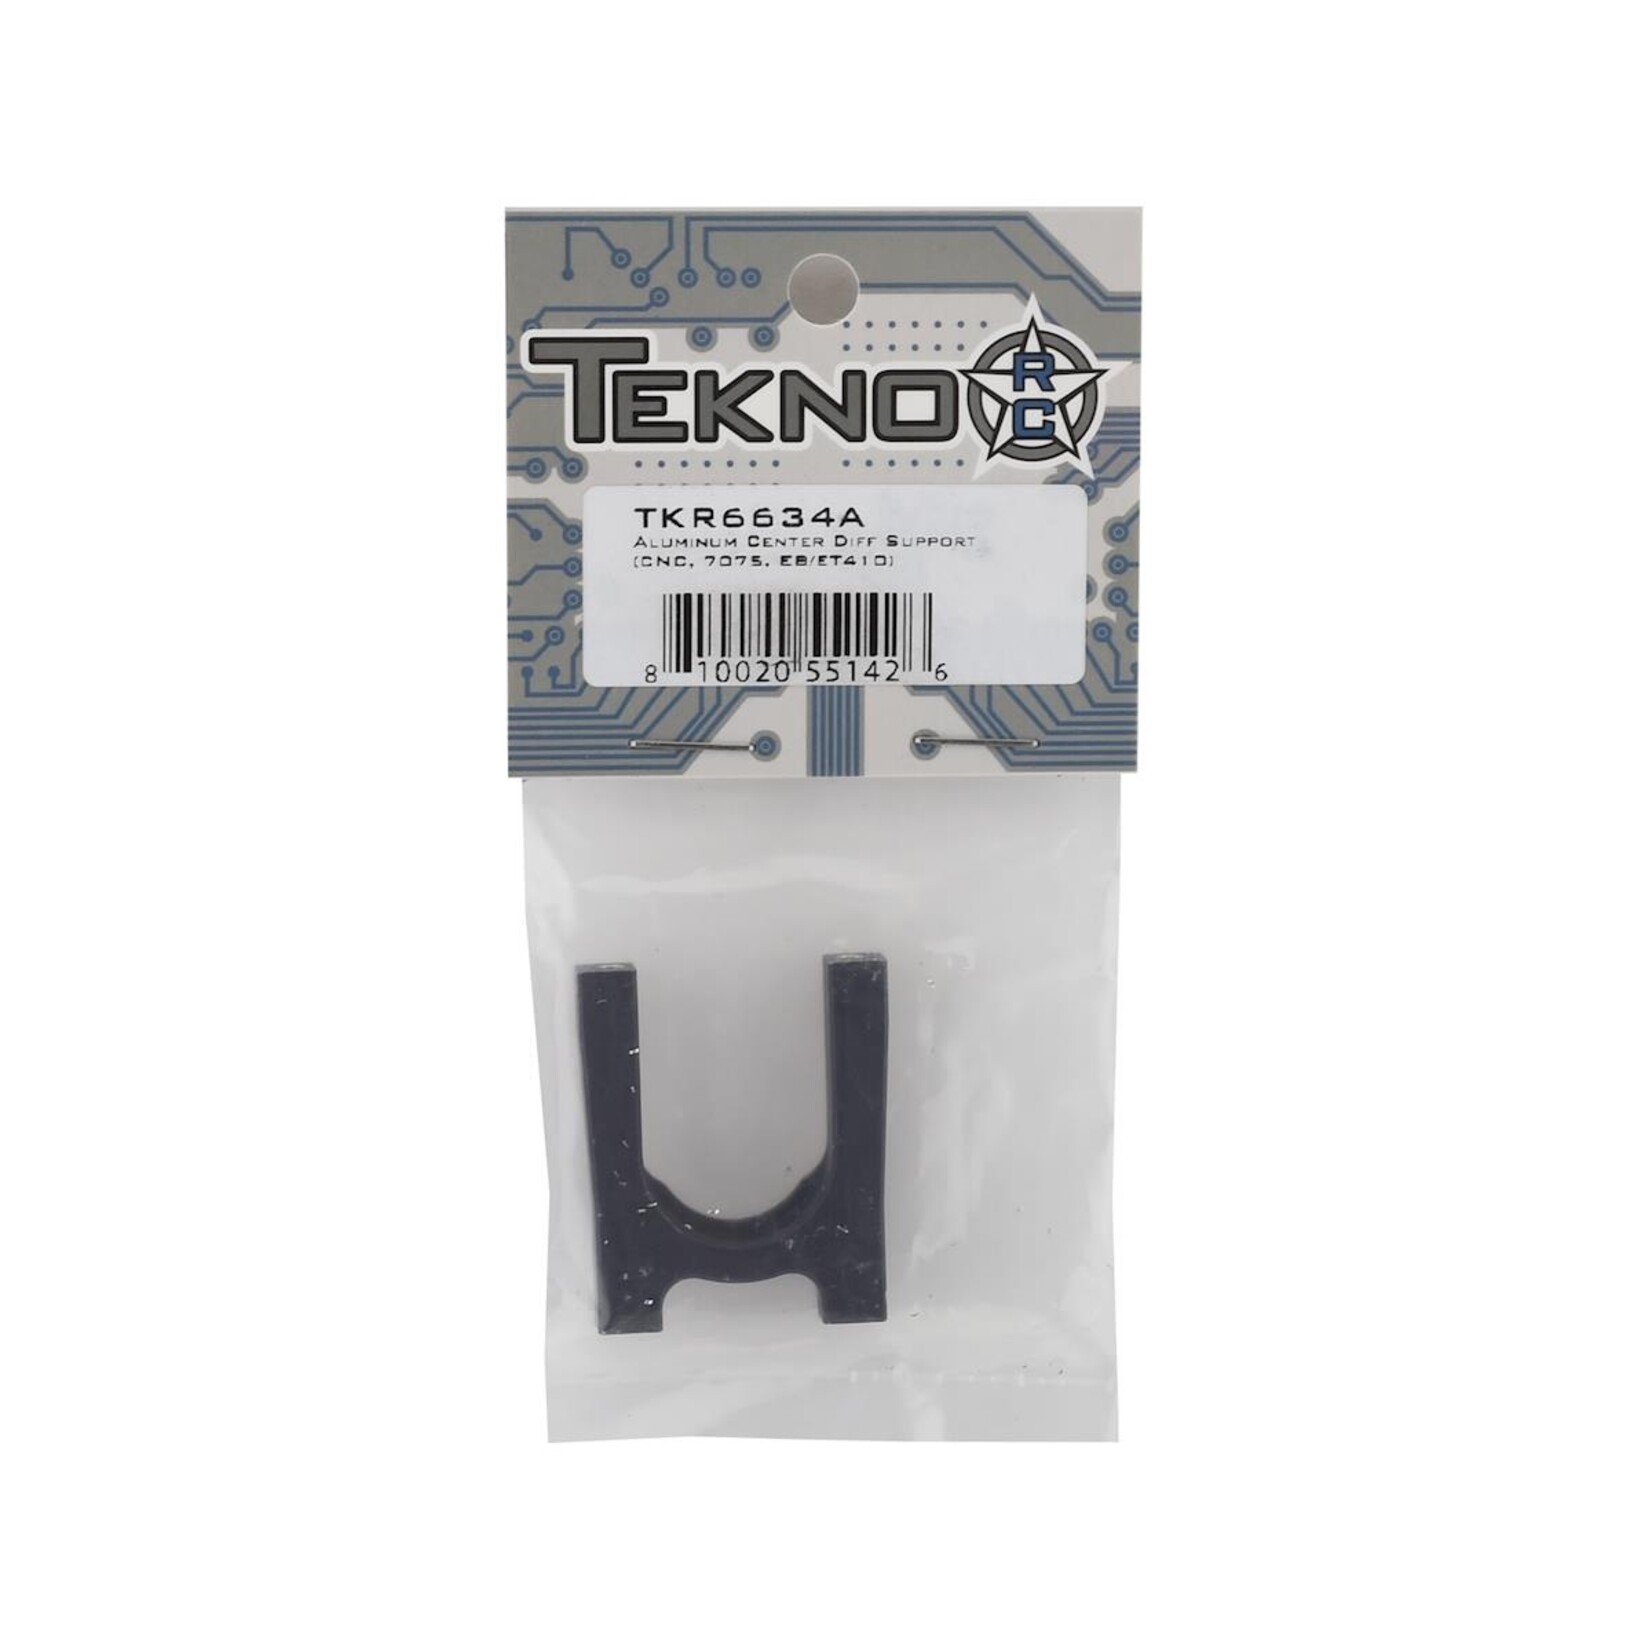 Tekno RC Tekno RC EB410/ET410 Aluminum Center Differential Support #TKR6634A